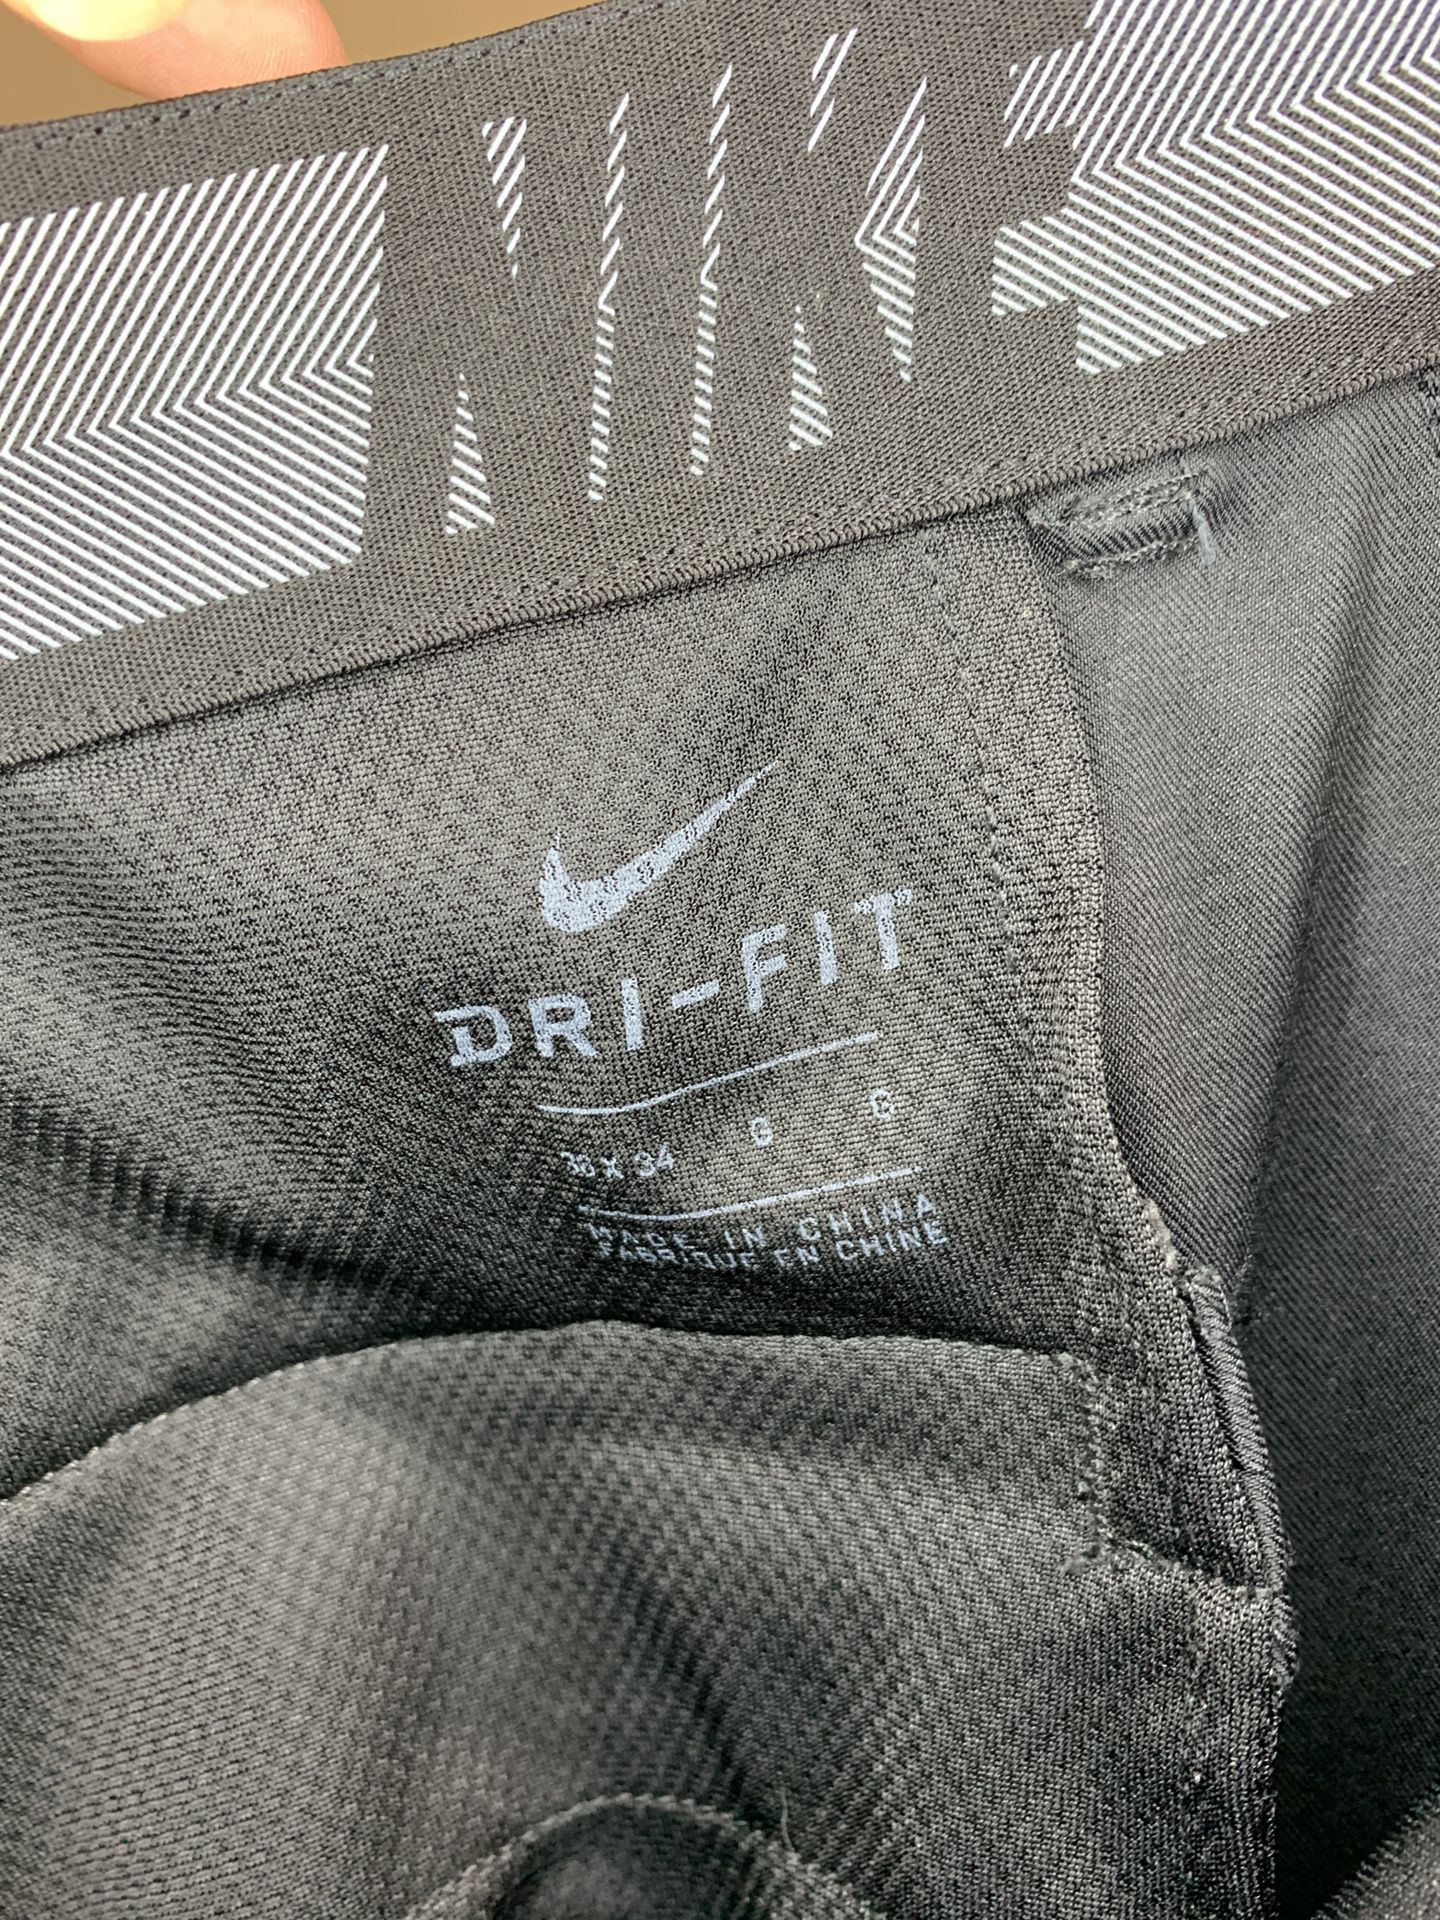 Nike Golf Dri Fit Pants Mens 36x34 Black Stretch Pre-owned